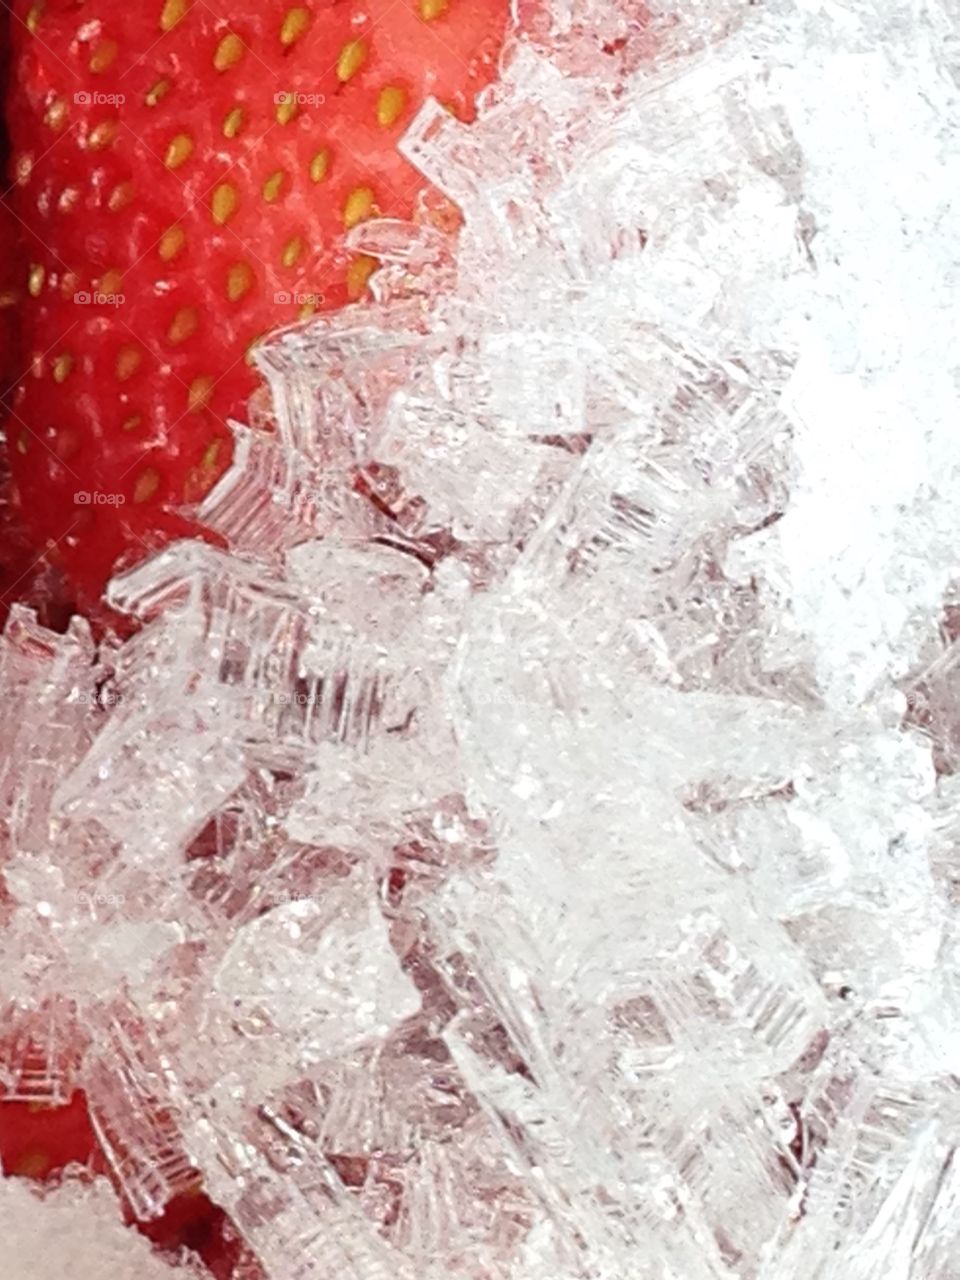 Freezer burn, ice on top of strawberries